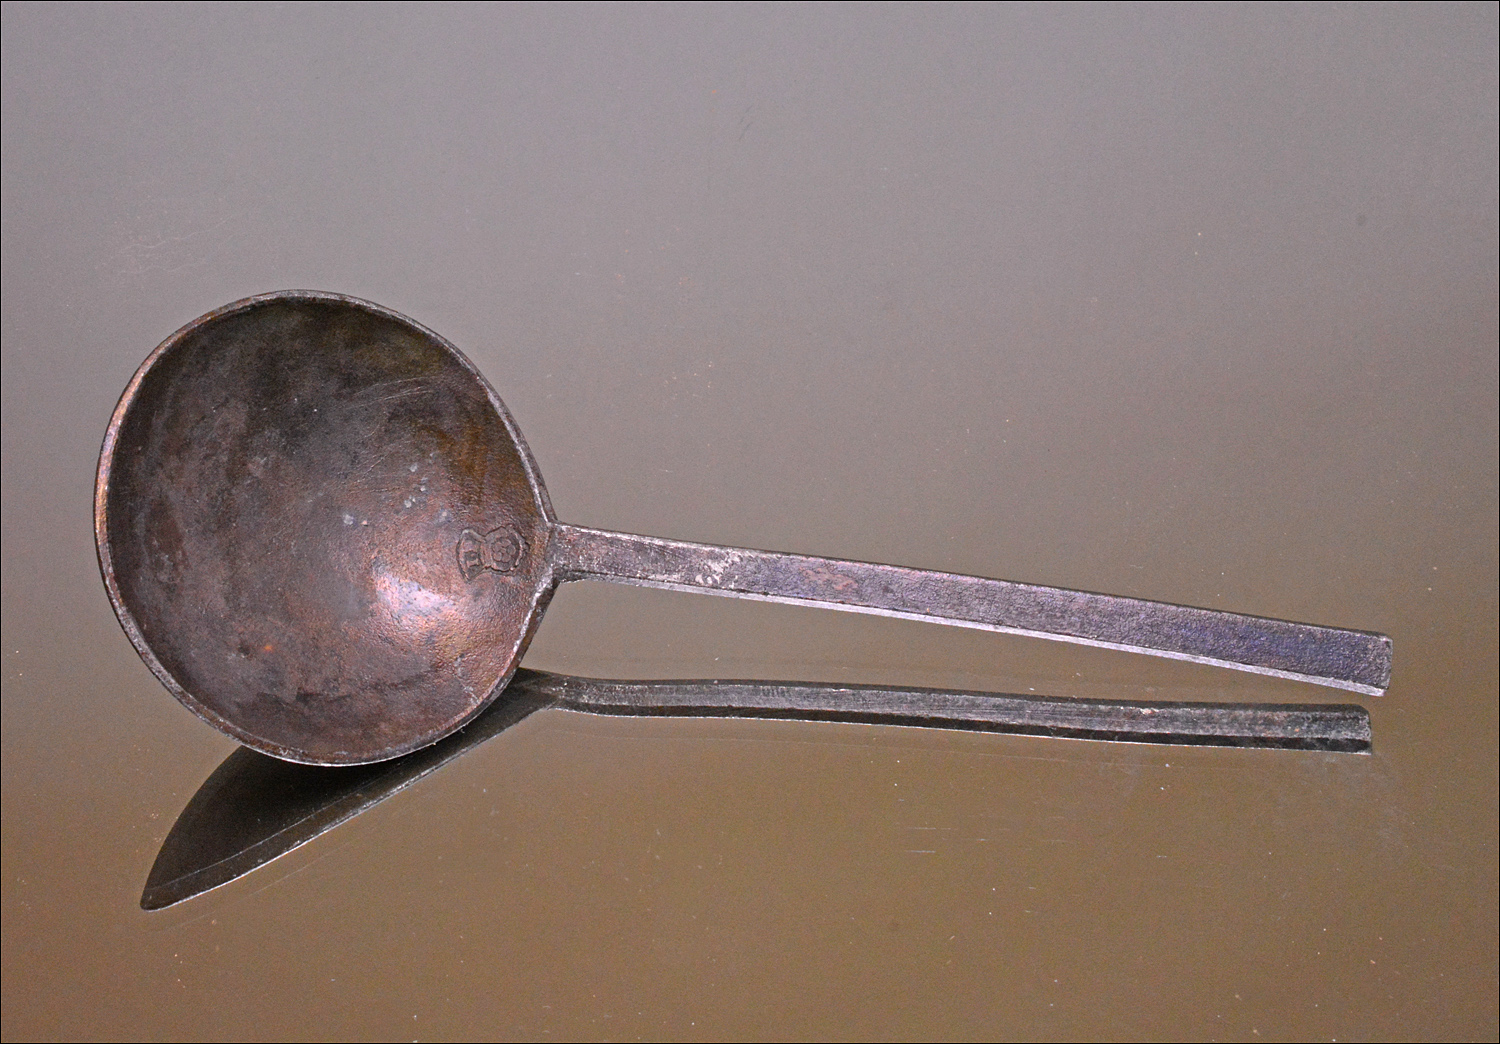 17/18th century pewter spoon.